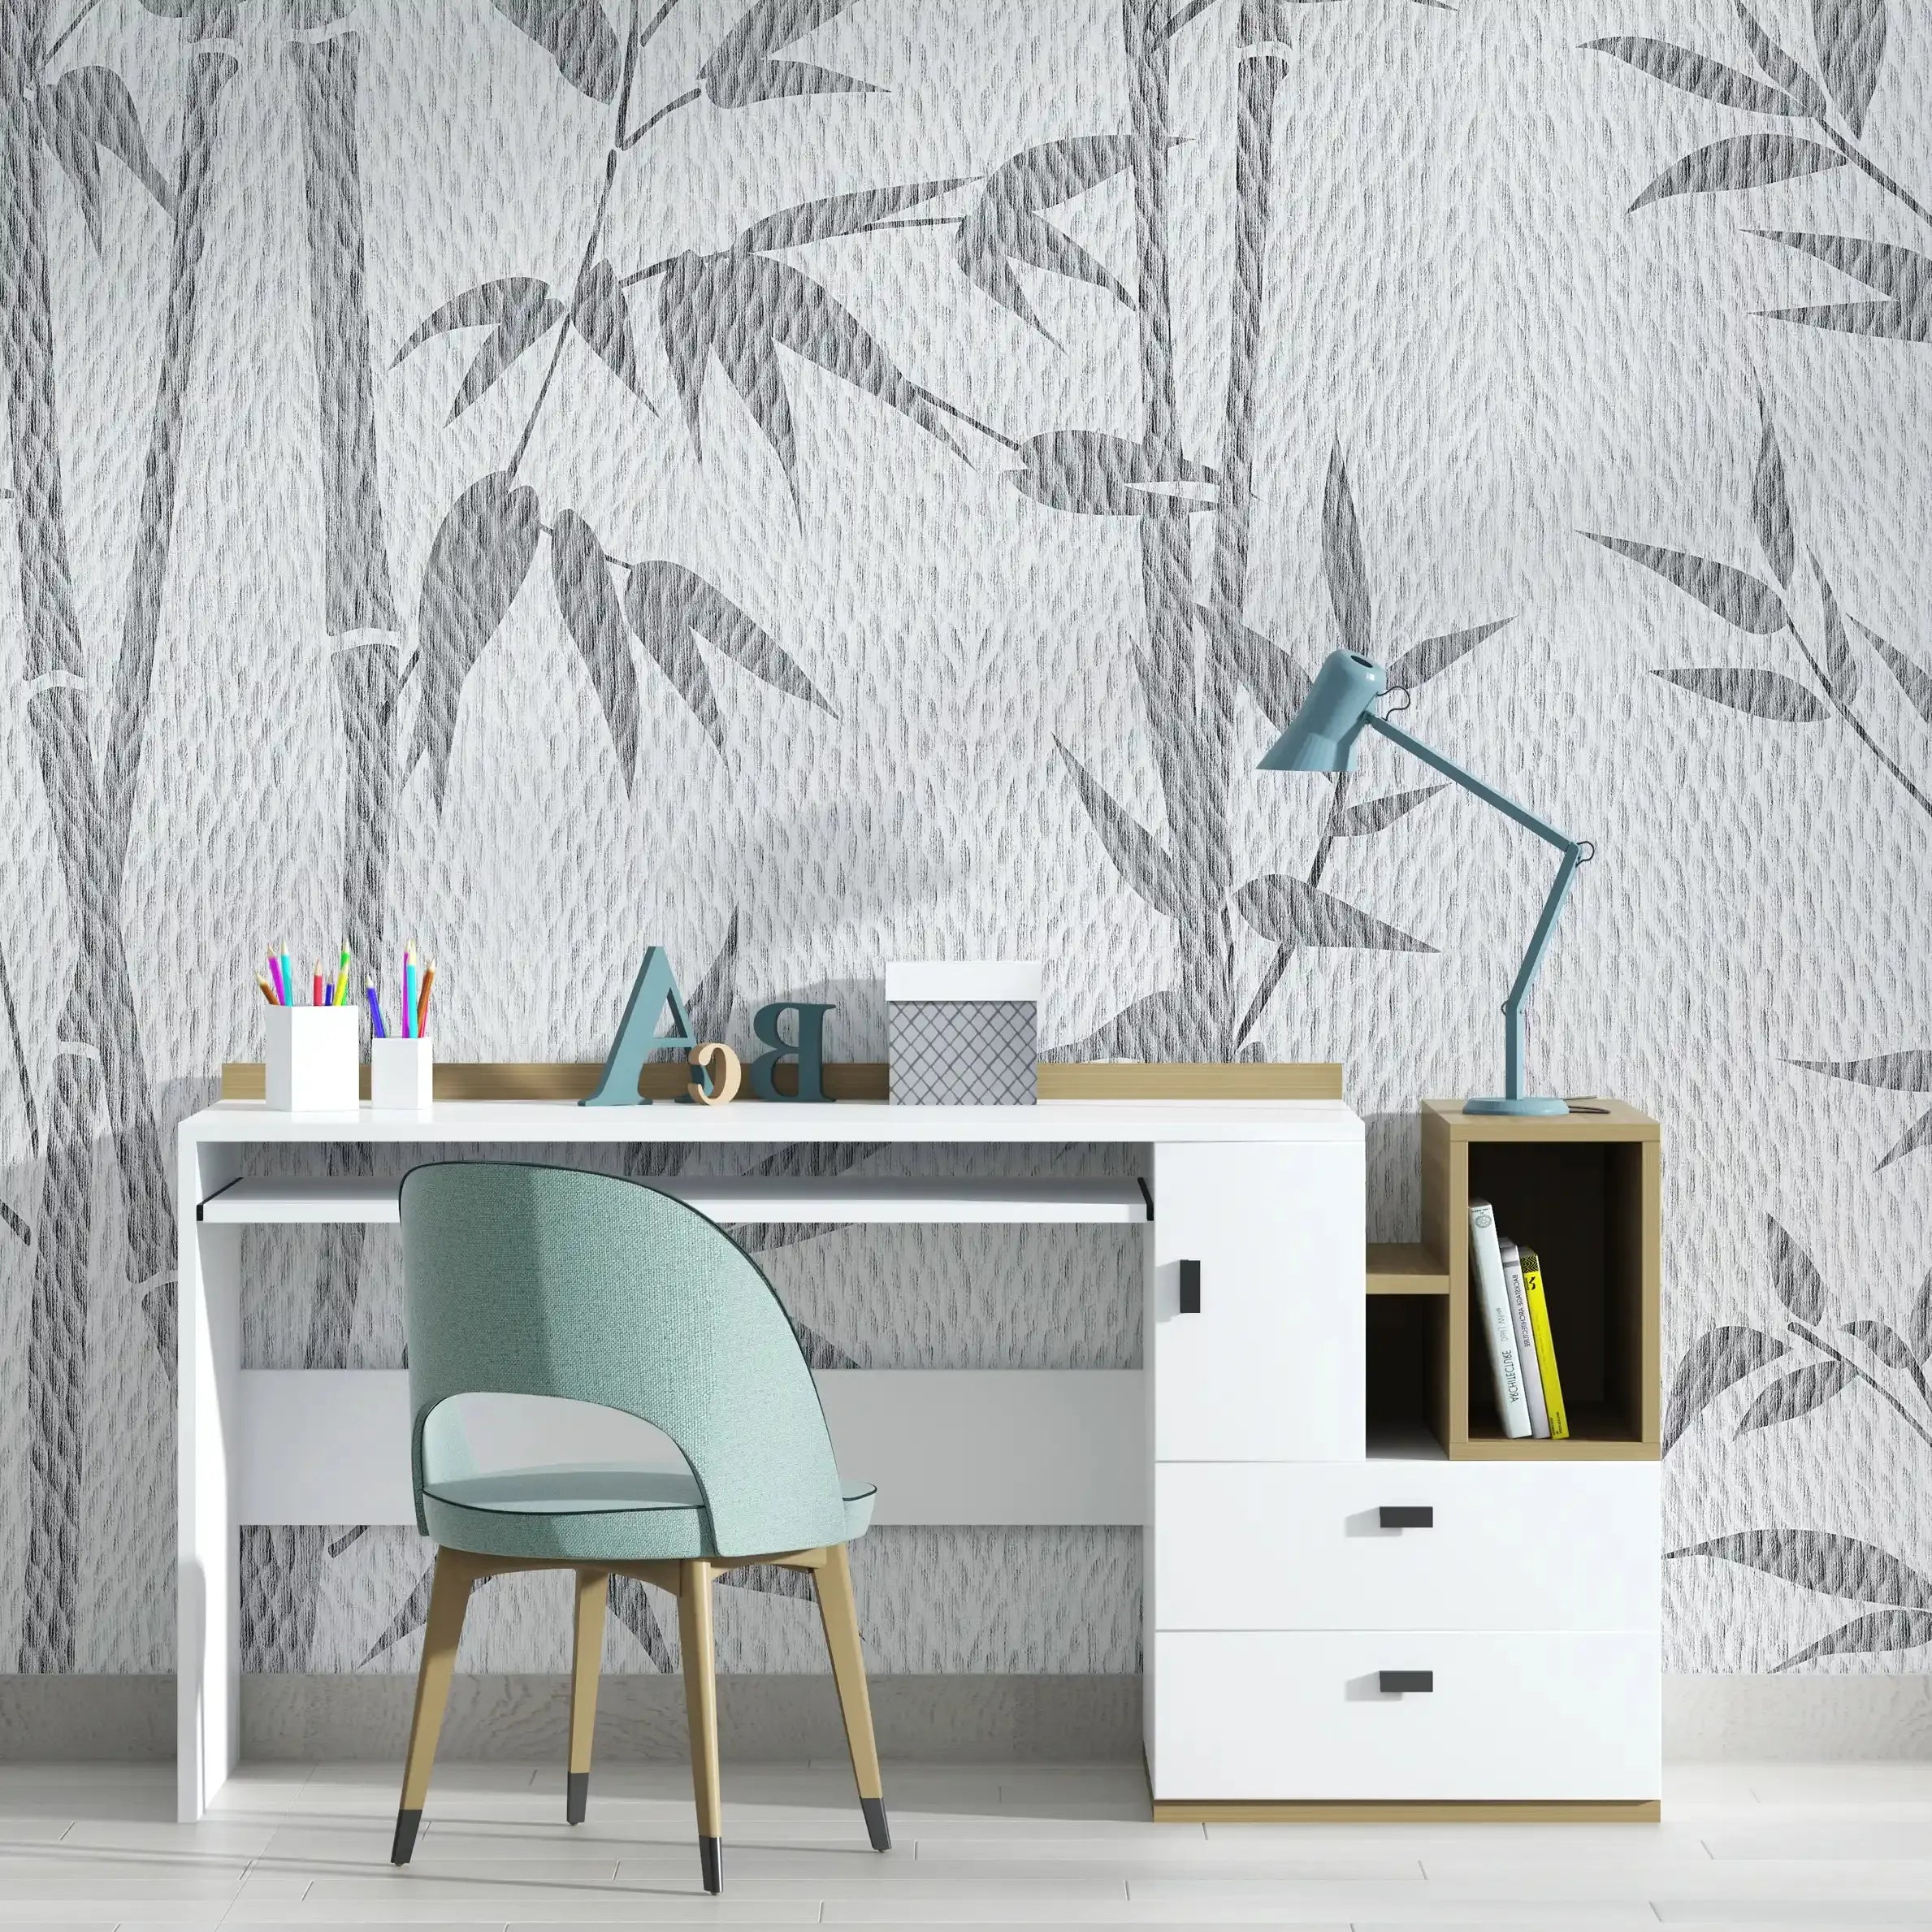 3020-E / Tropical Bamboo Leaf Wallpaper, Peel and Stick, Easy Install, Adhesive Boho Decor for Kitchen, Bathroom - Artevella